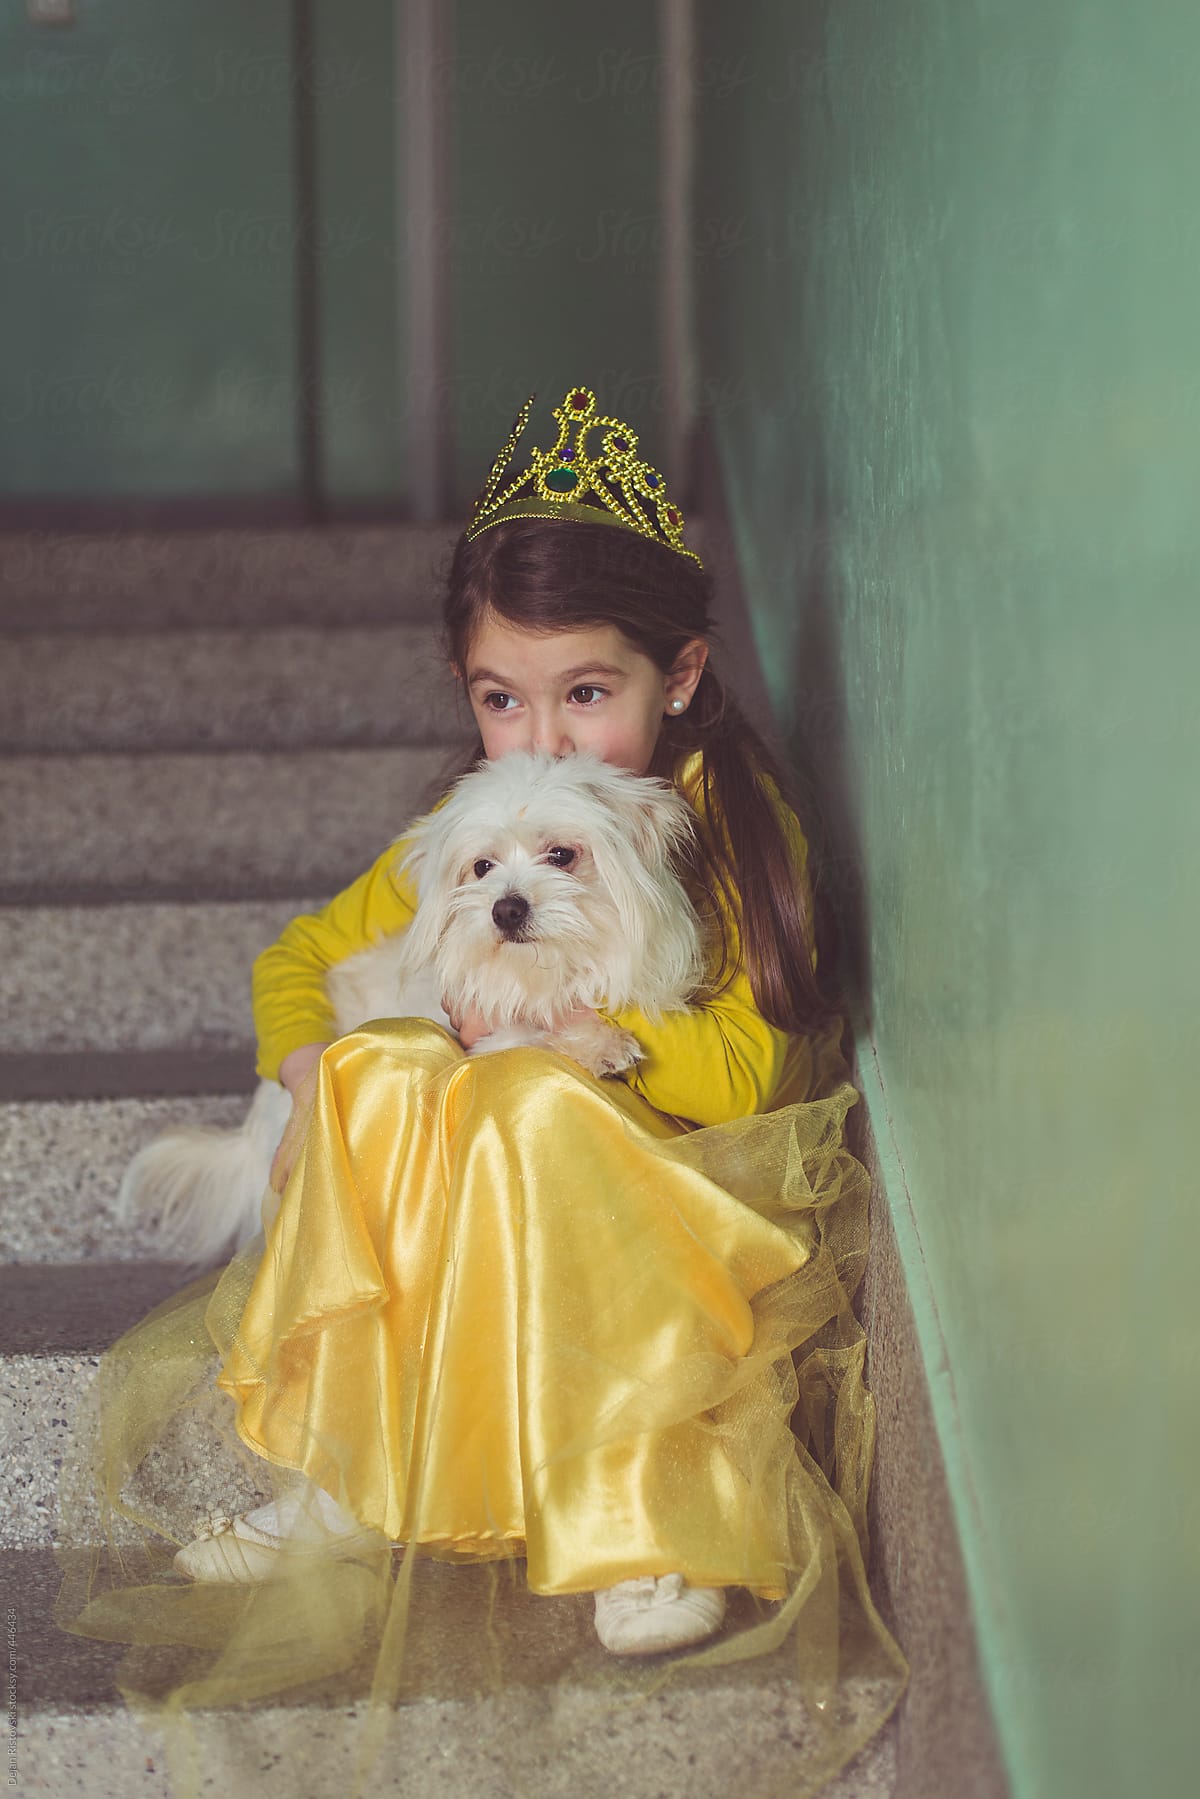 Princess with her dog